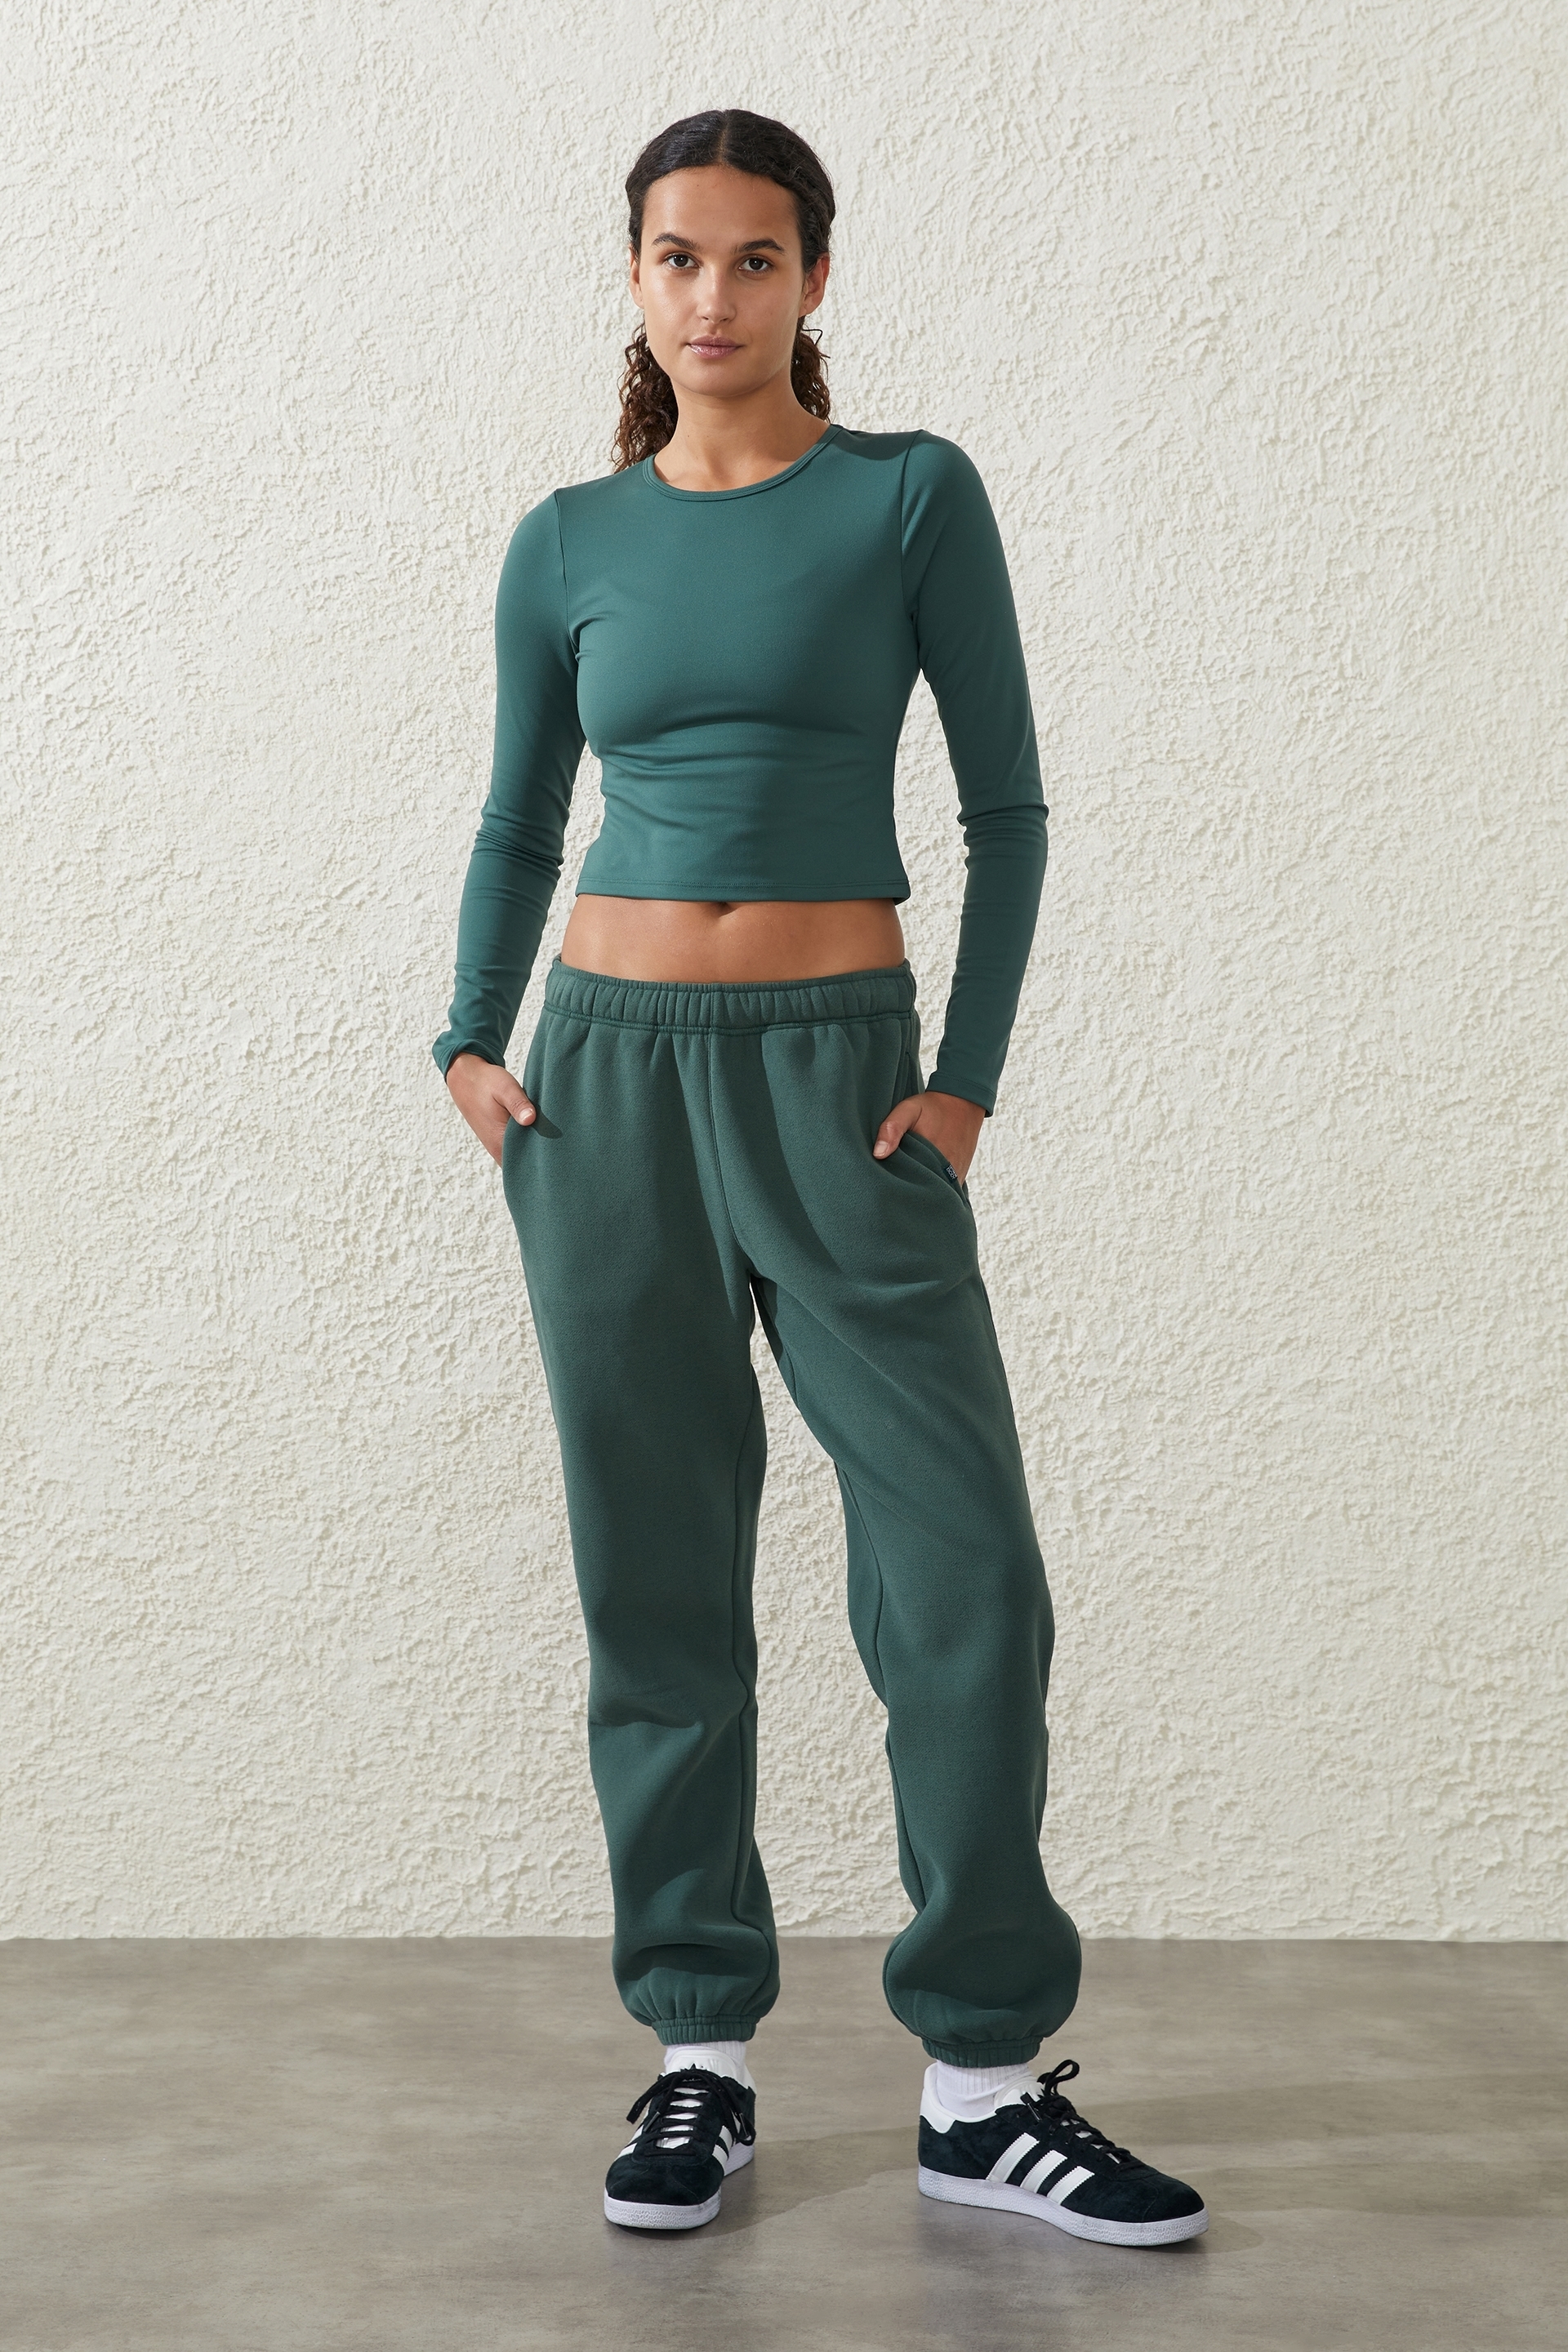 Body - Plush Essential Gym Sweatpant - Holly green